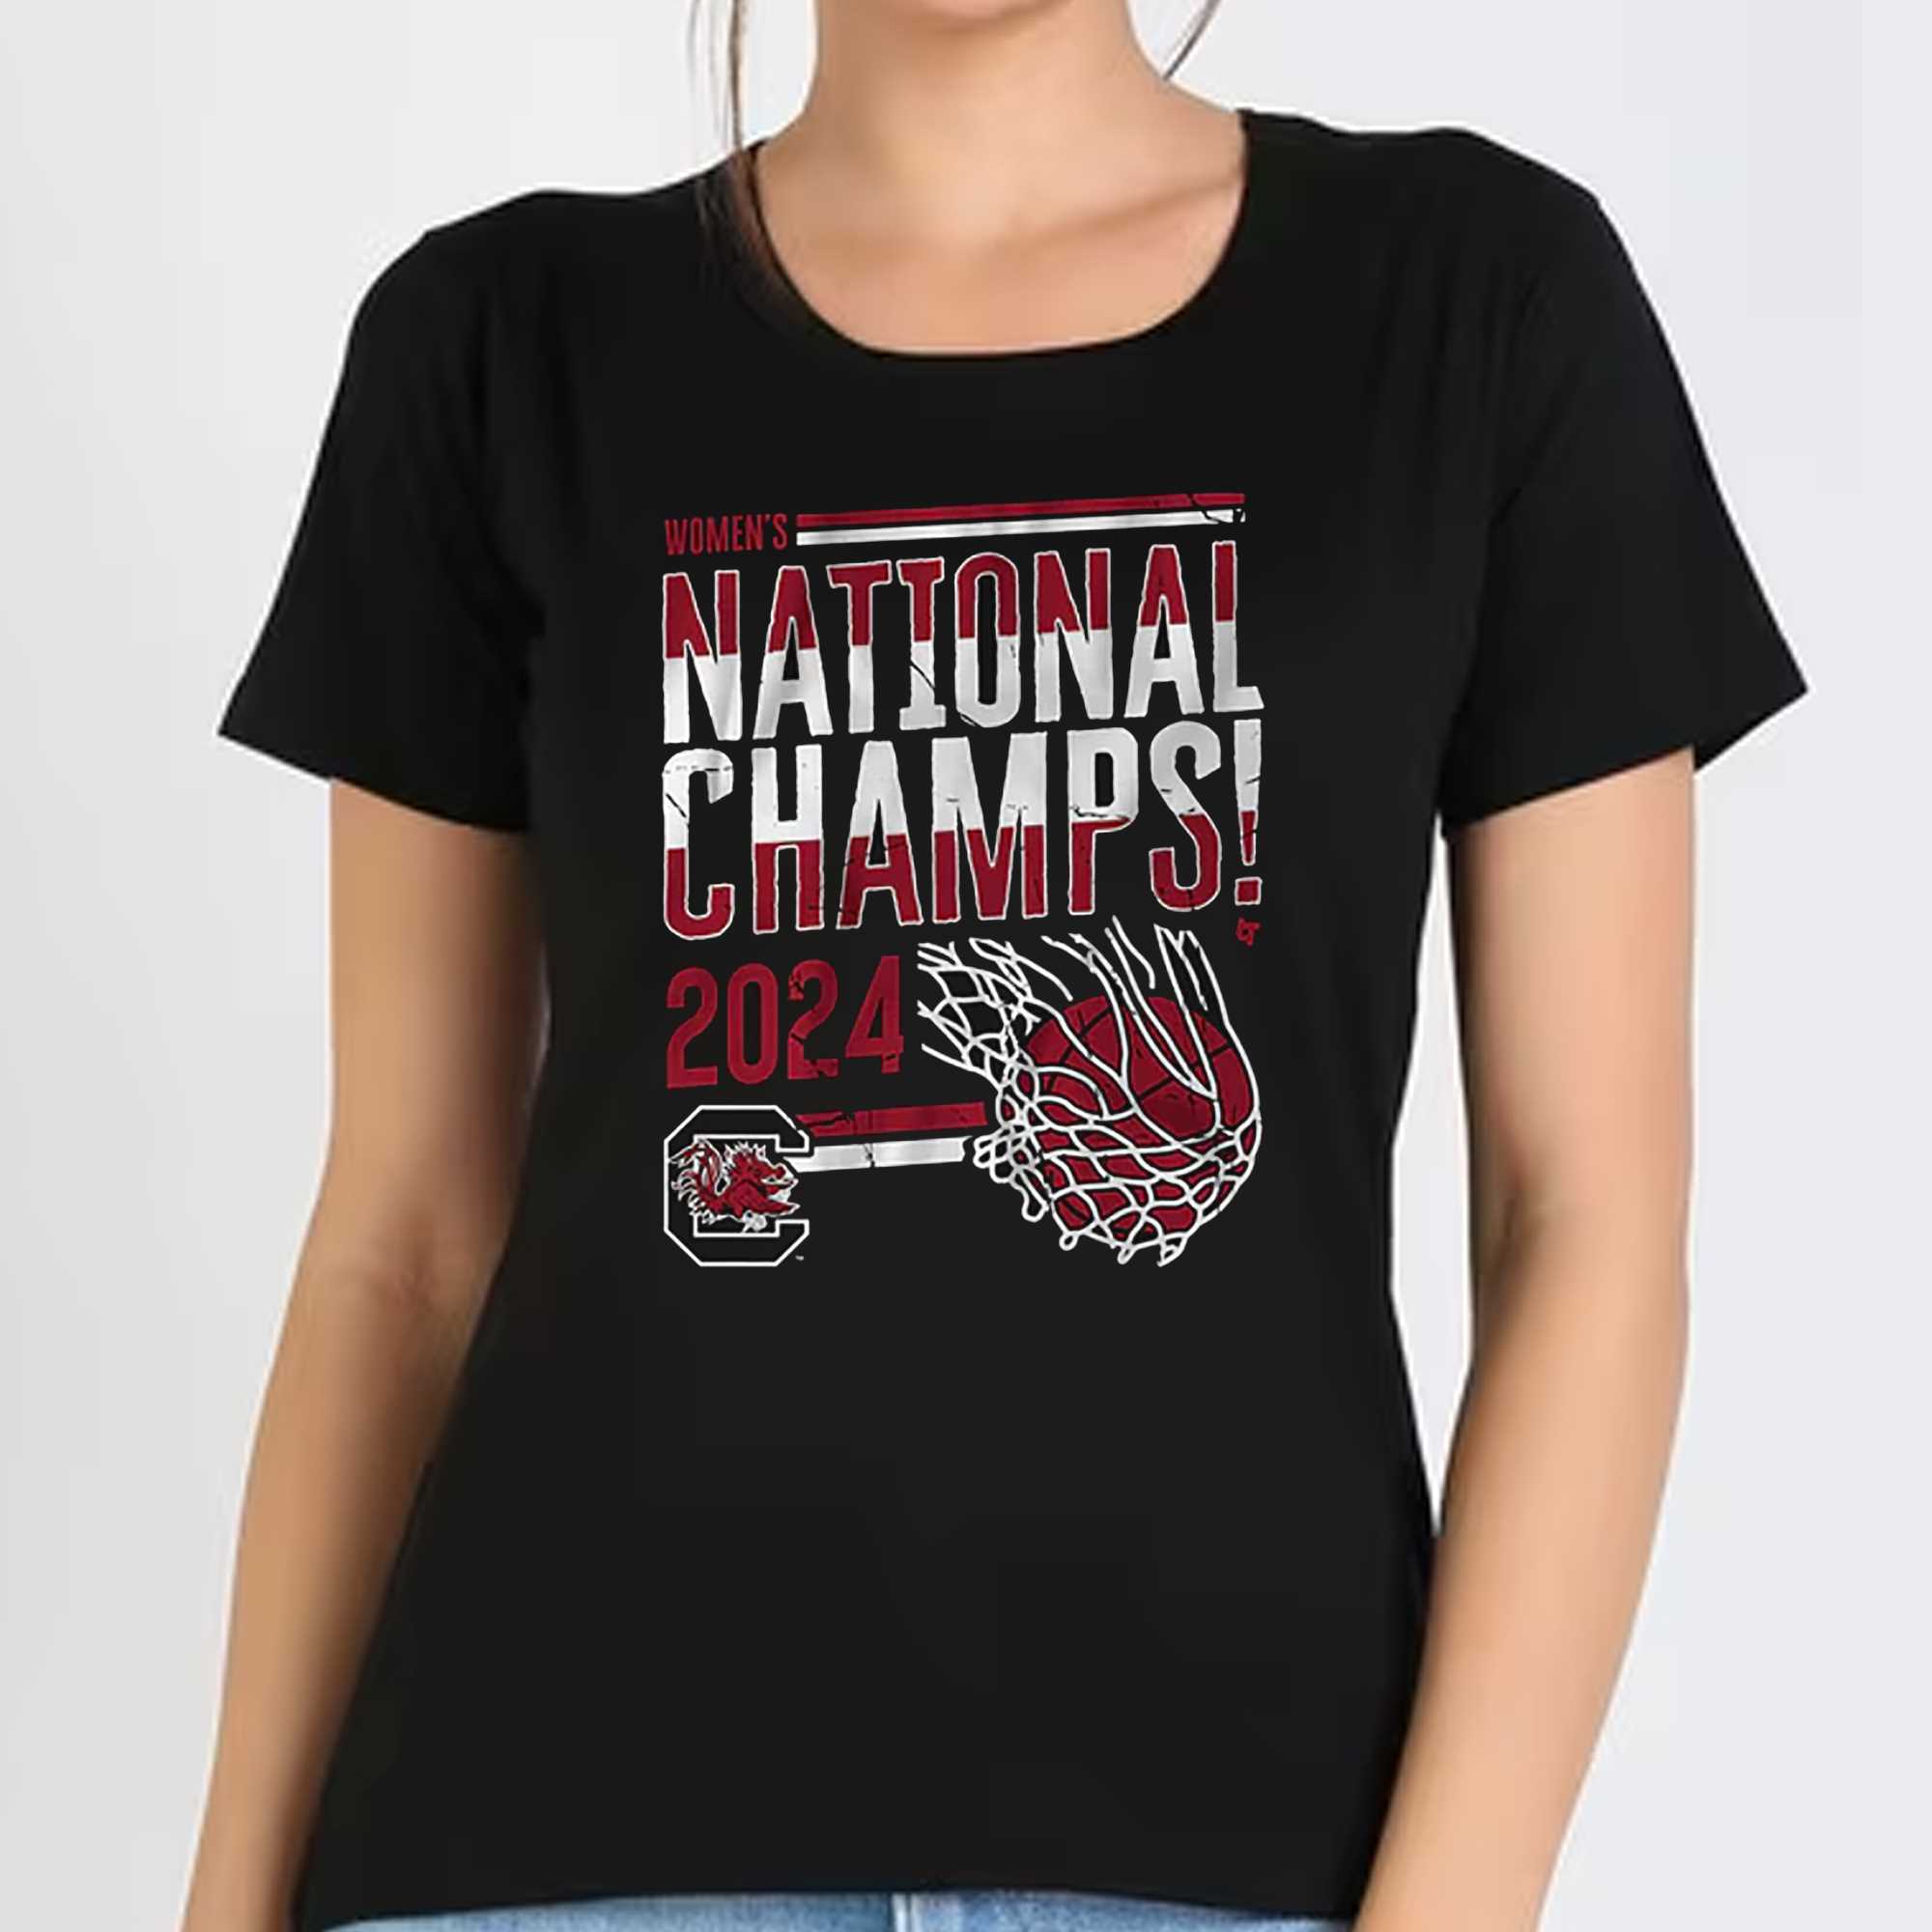 Celebrate the South Carolina Women's Basketball Team's 2024 National